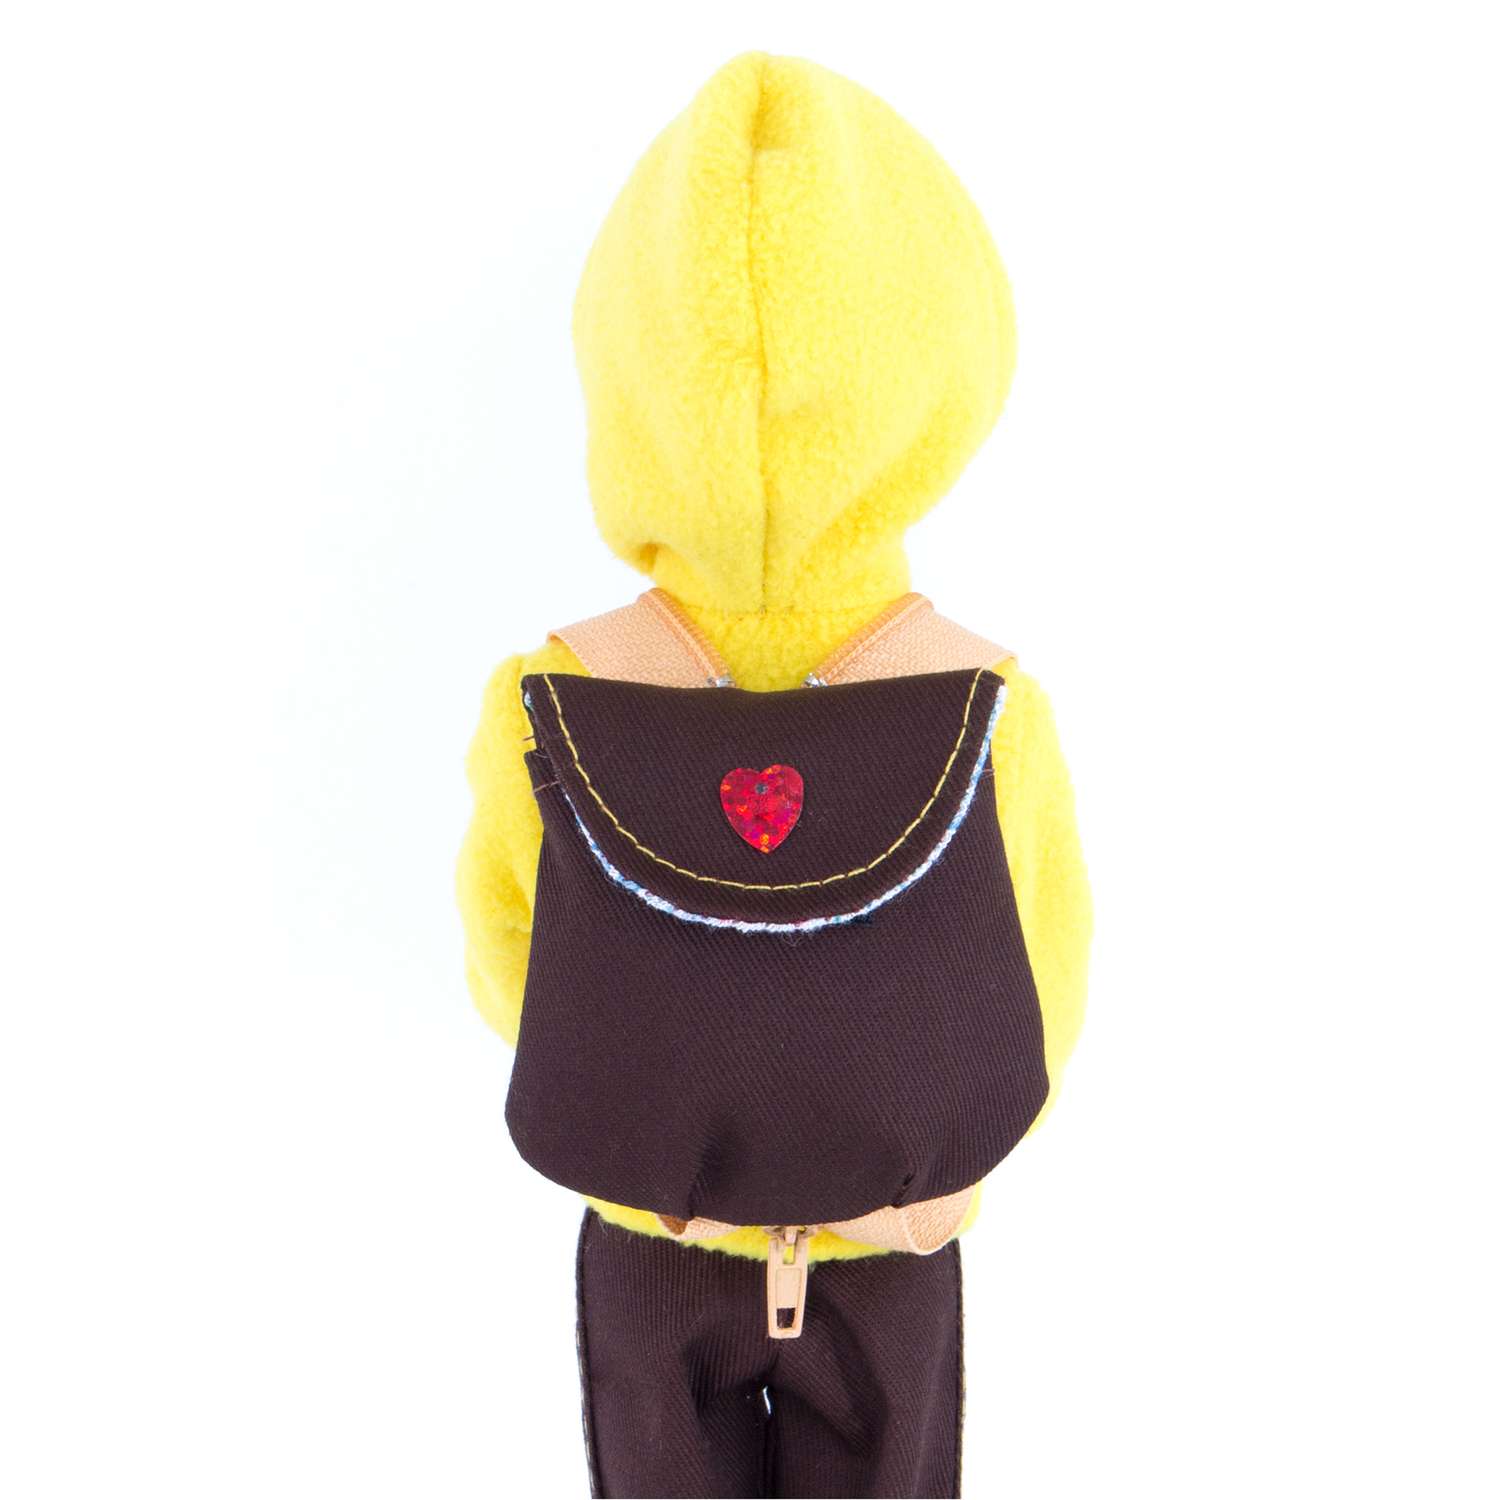 Набор одежды Модница для куклы 29 см 9999 желтый 9999желтый&amp;коричневый - фото 9